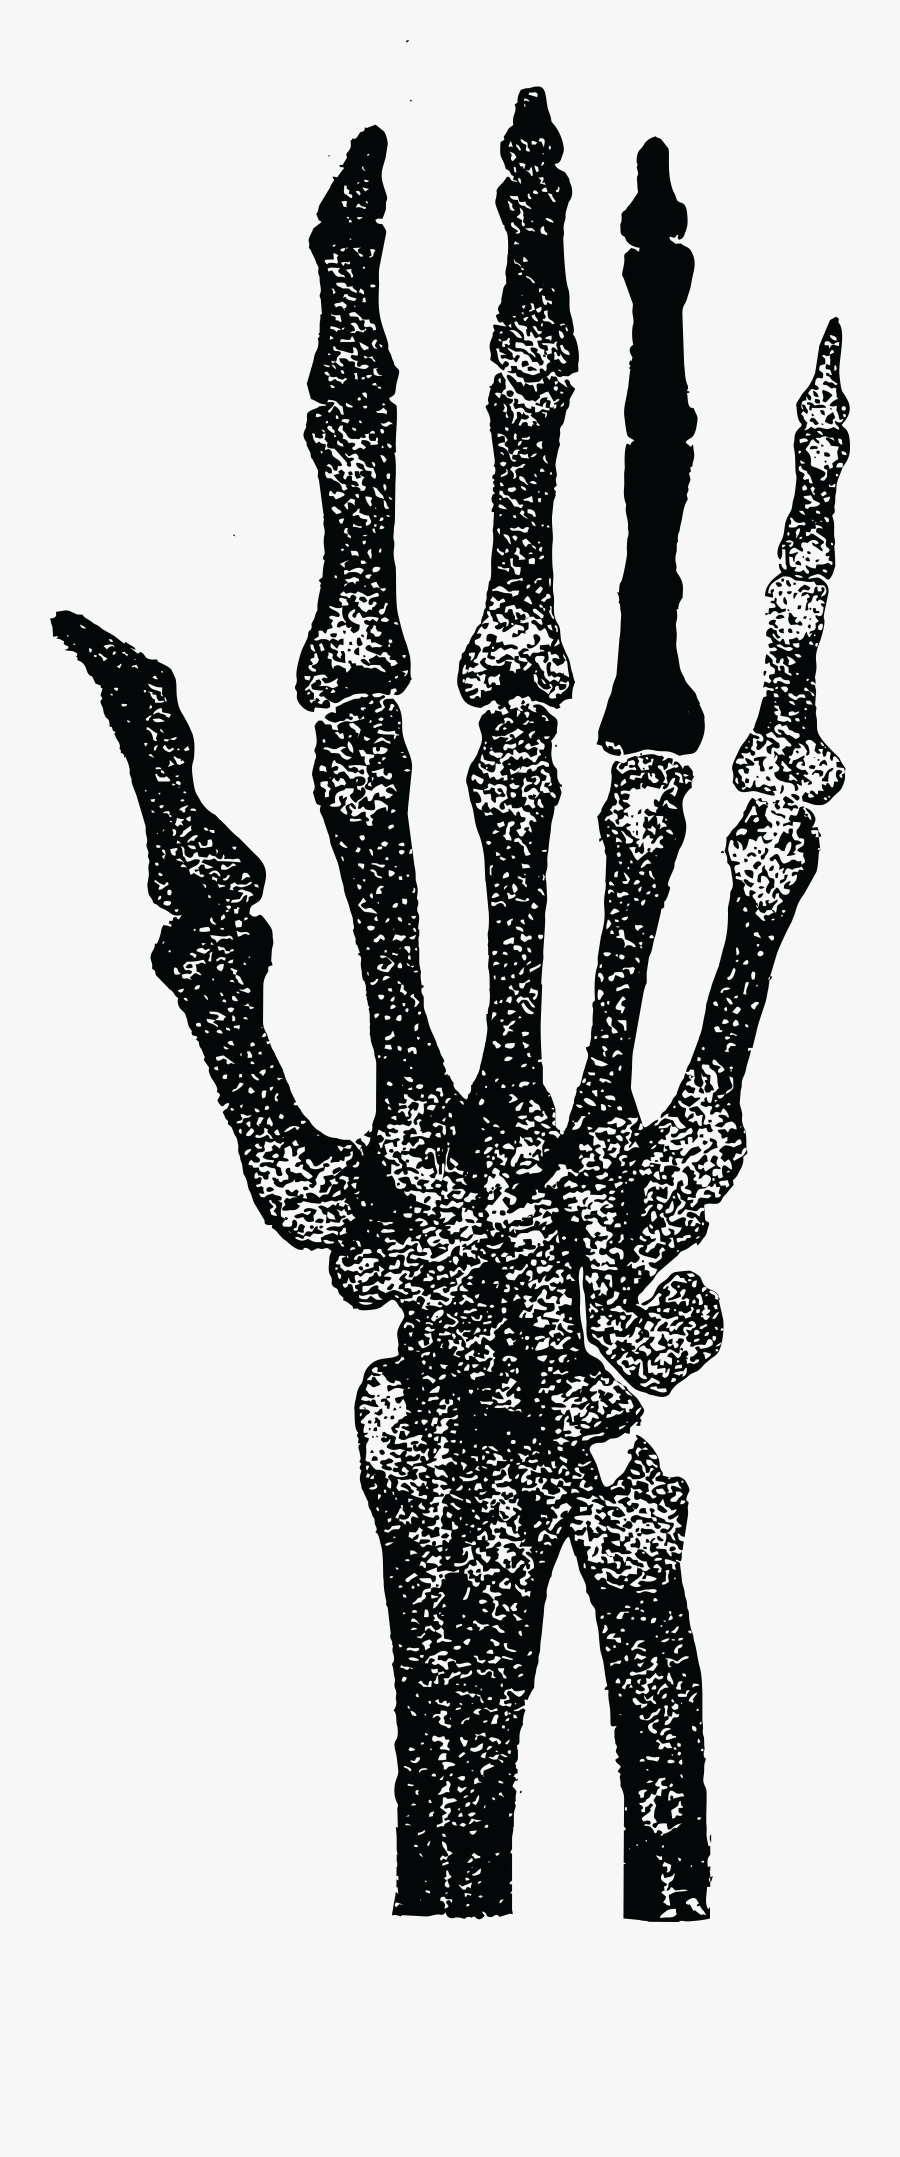 Free Clipart Of A Skeletal Hand - Skeleton Hand Illustration Png, Transparent Clipart